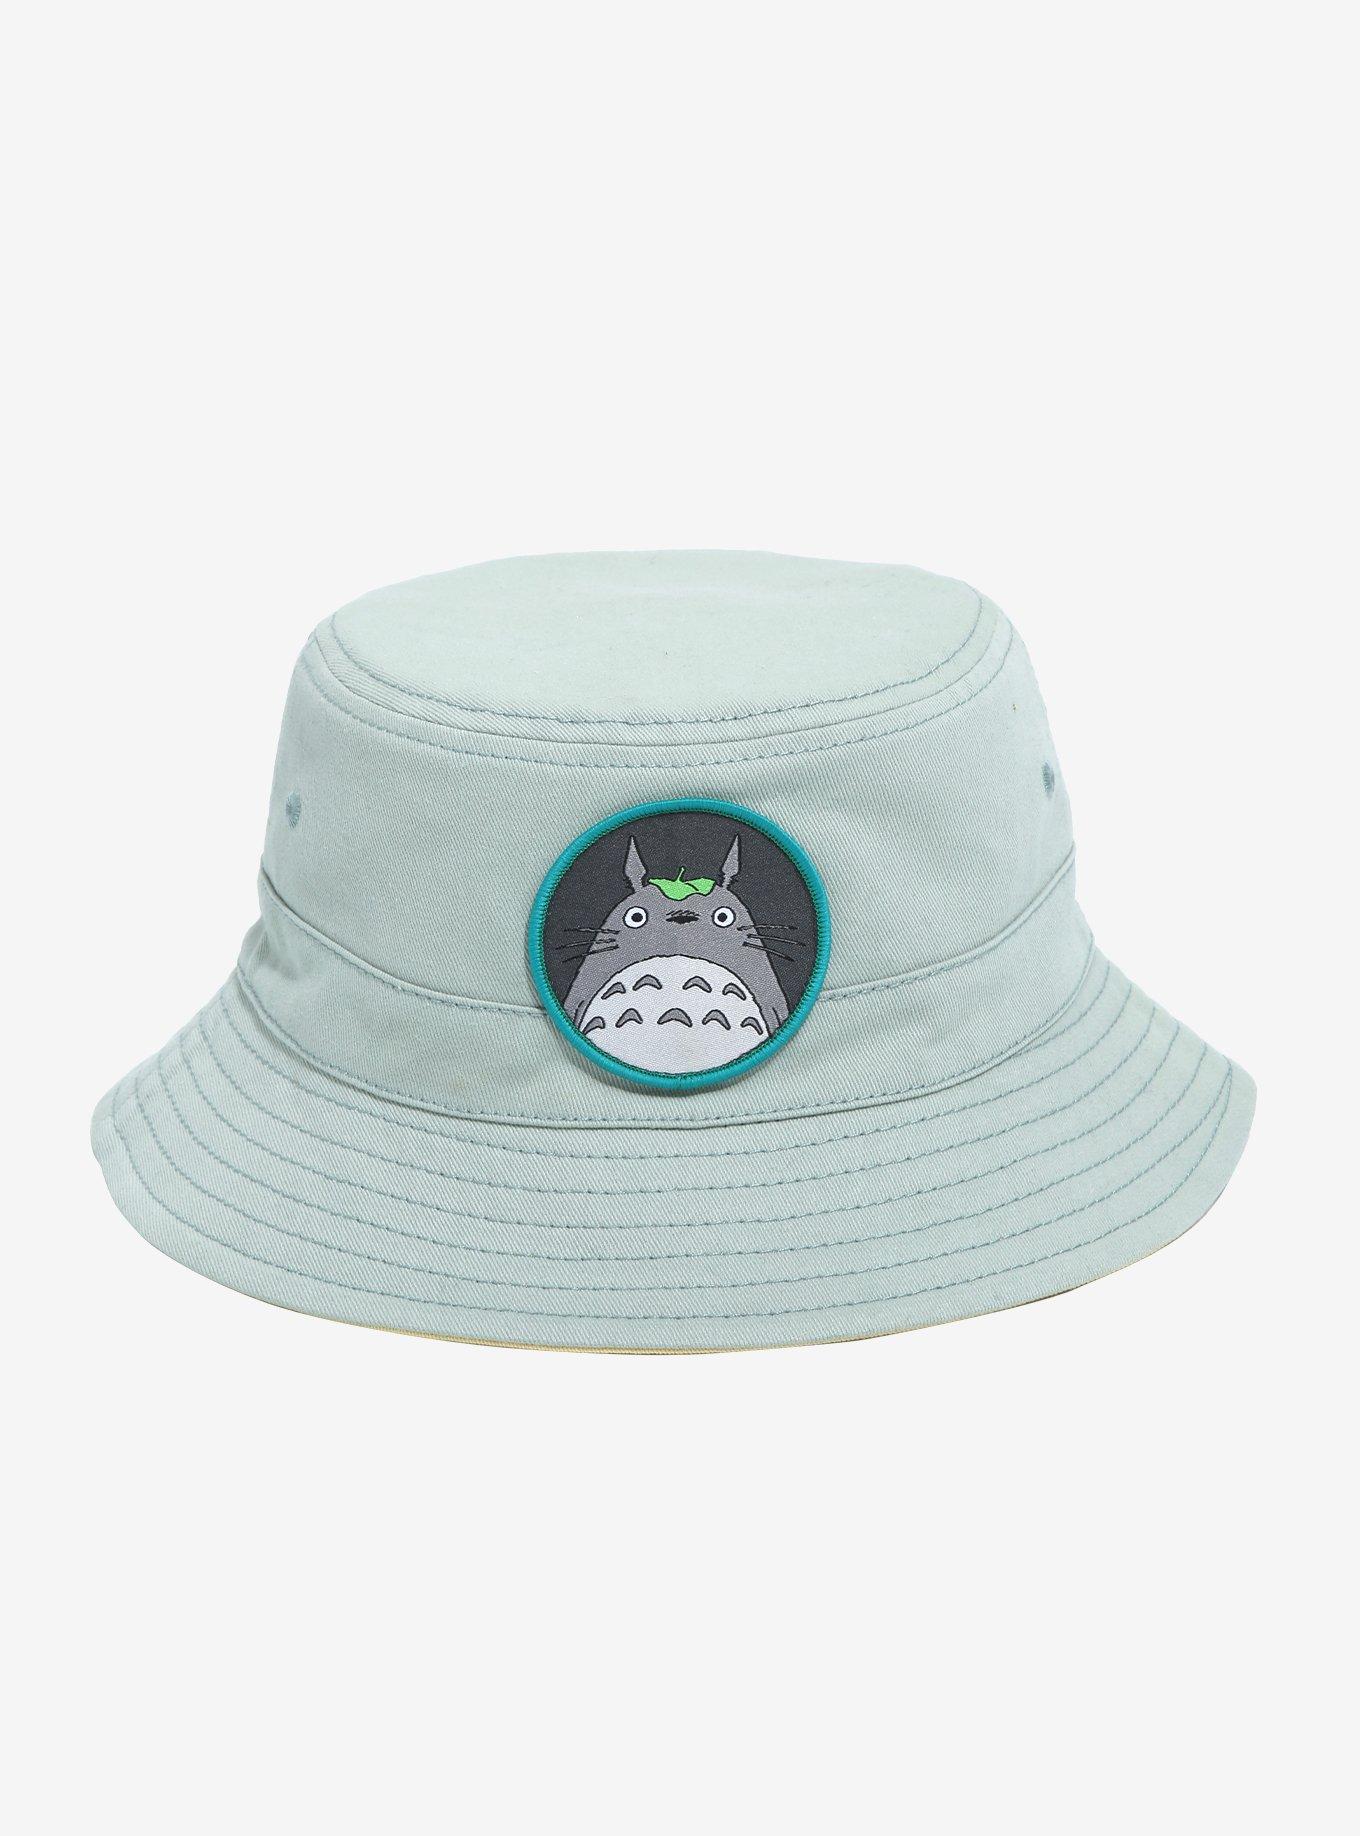 New Mint Green Spirit Jersey, Bucket Hat, Minnie Ears and